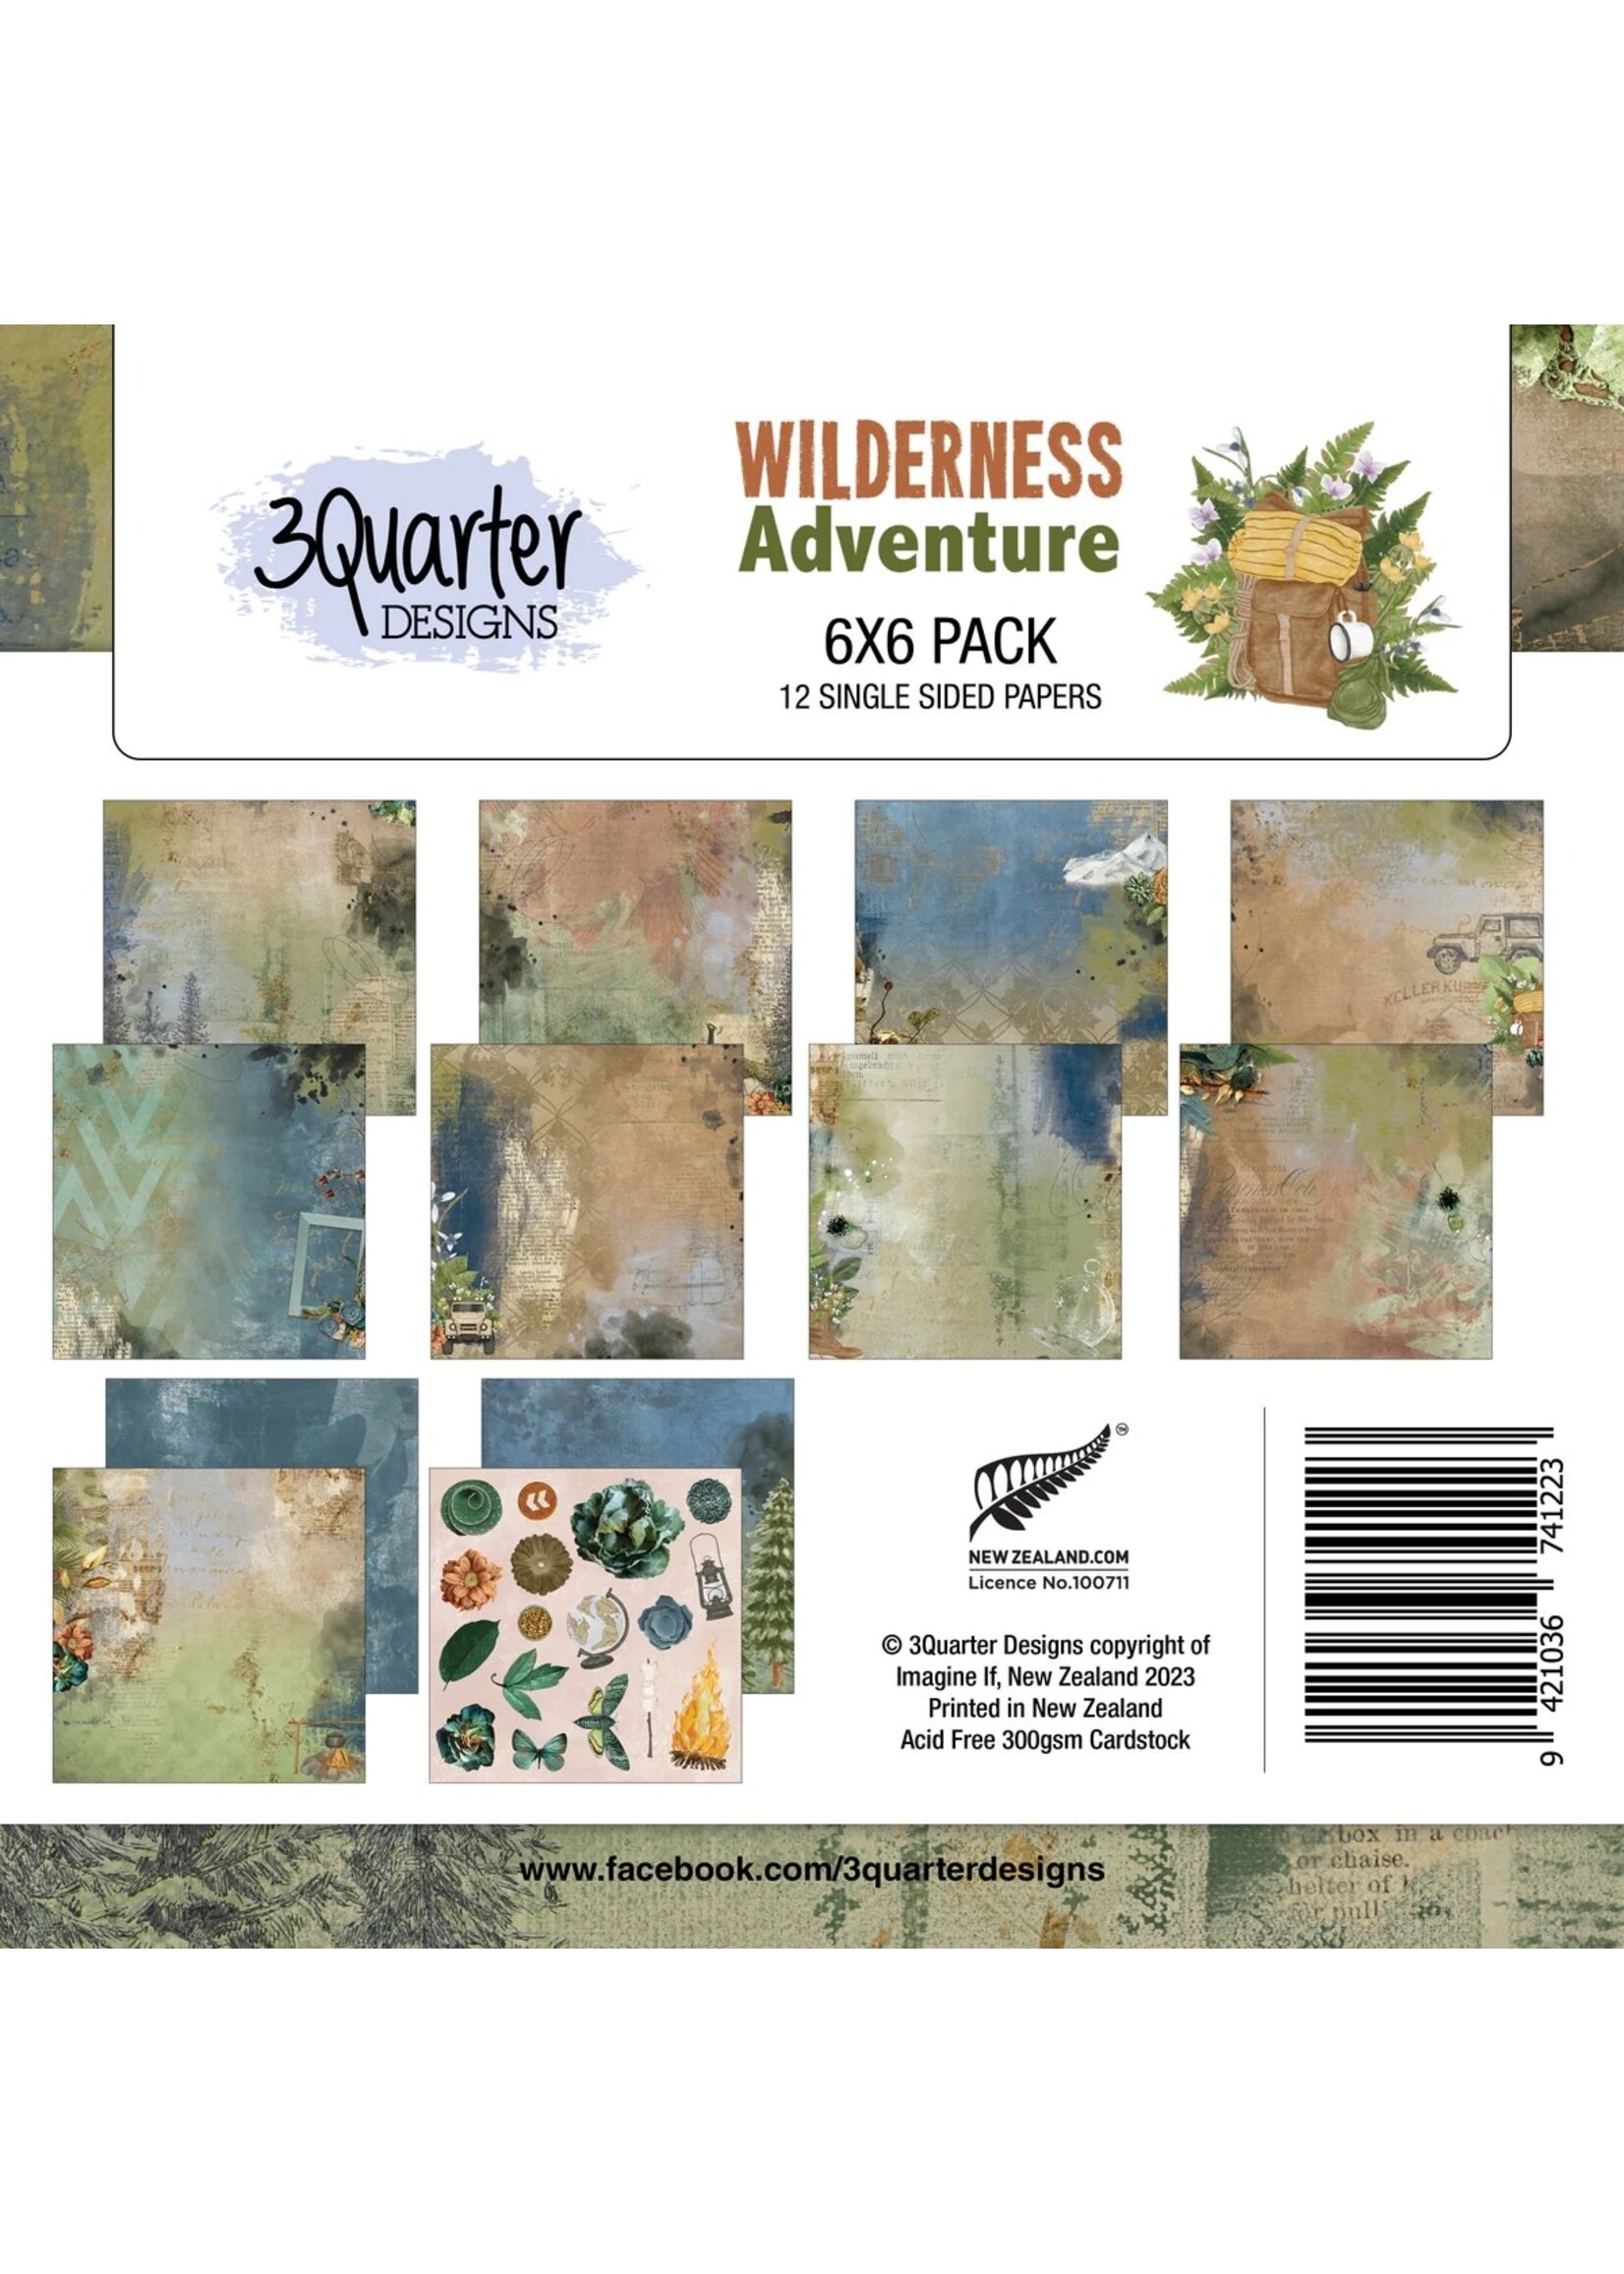 3Quarter Designs Wilderness Adventure 6x6 Paper Pad